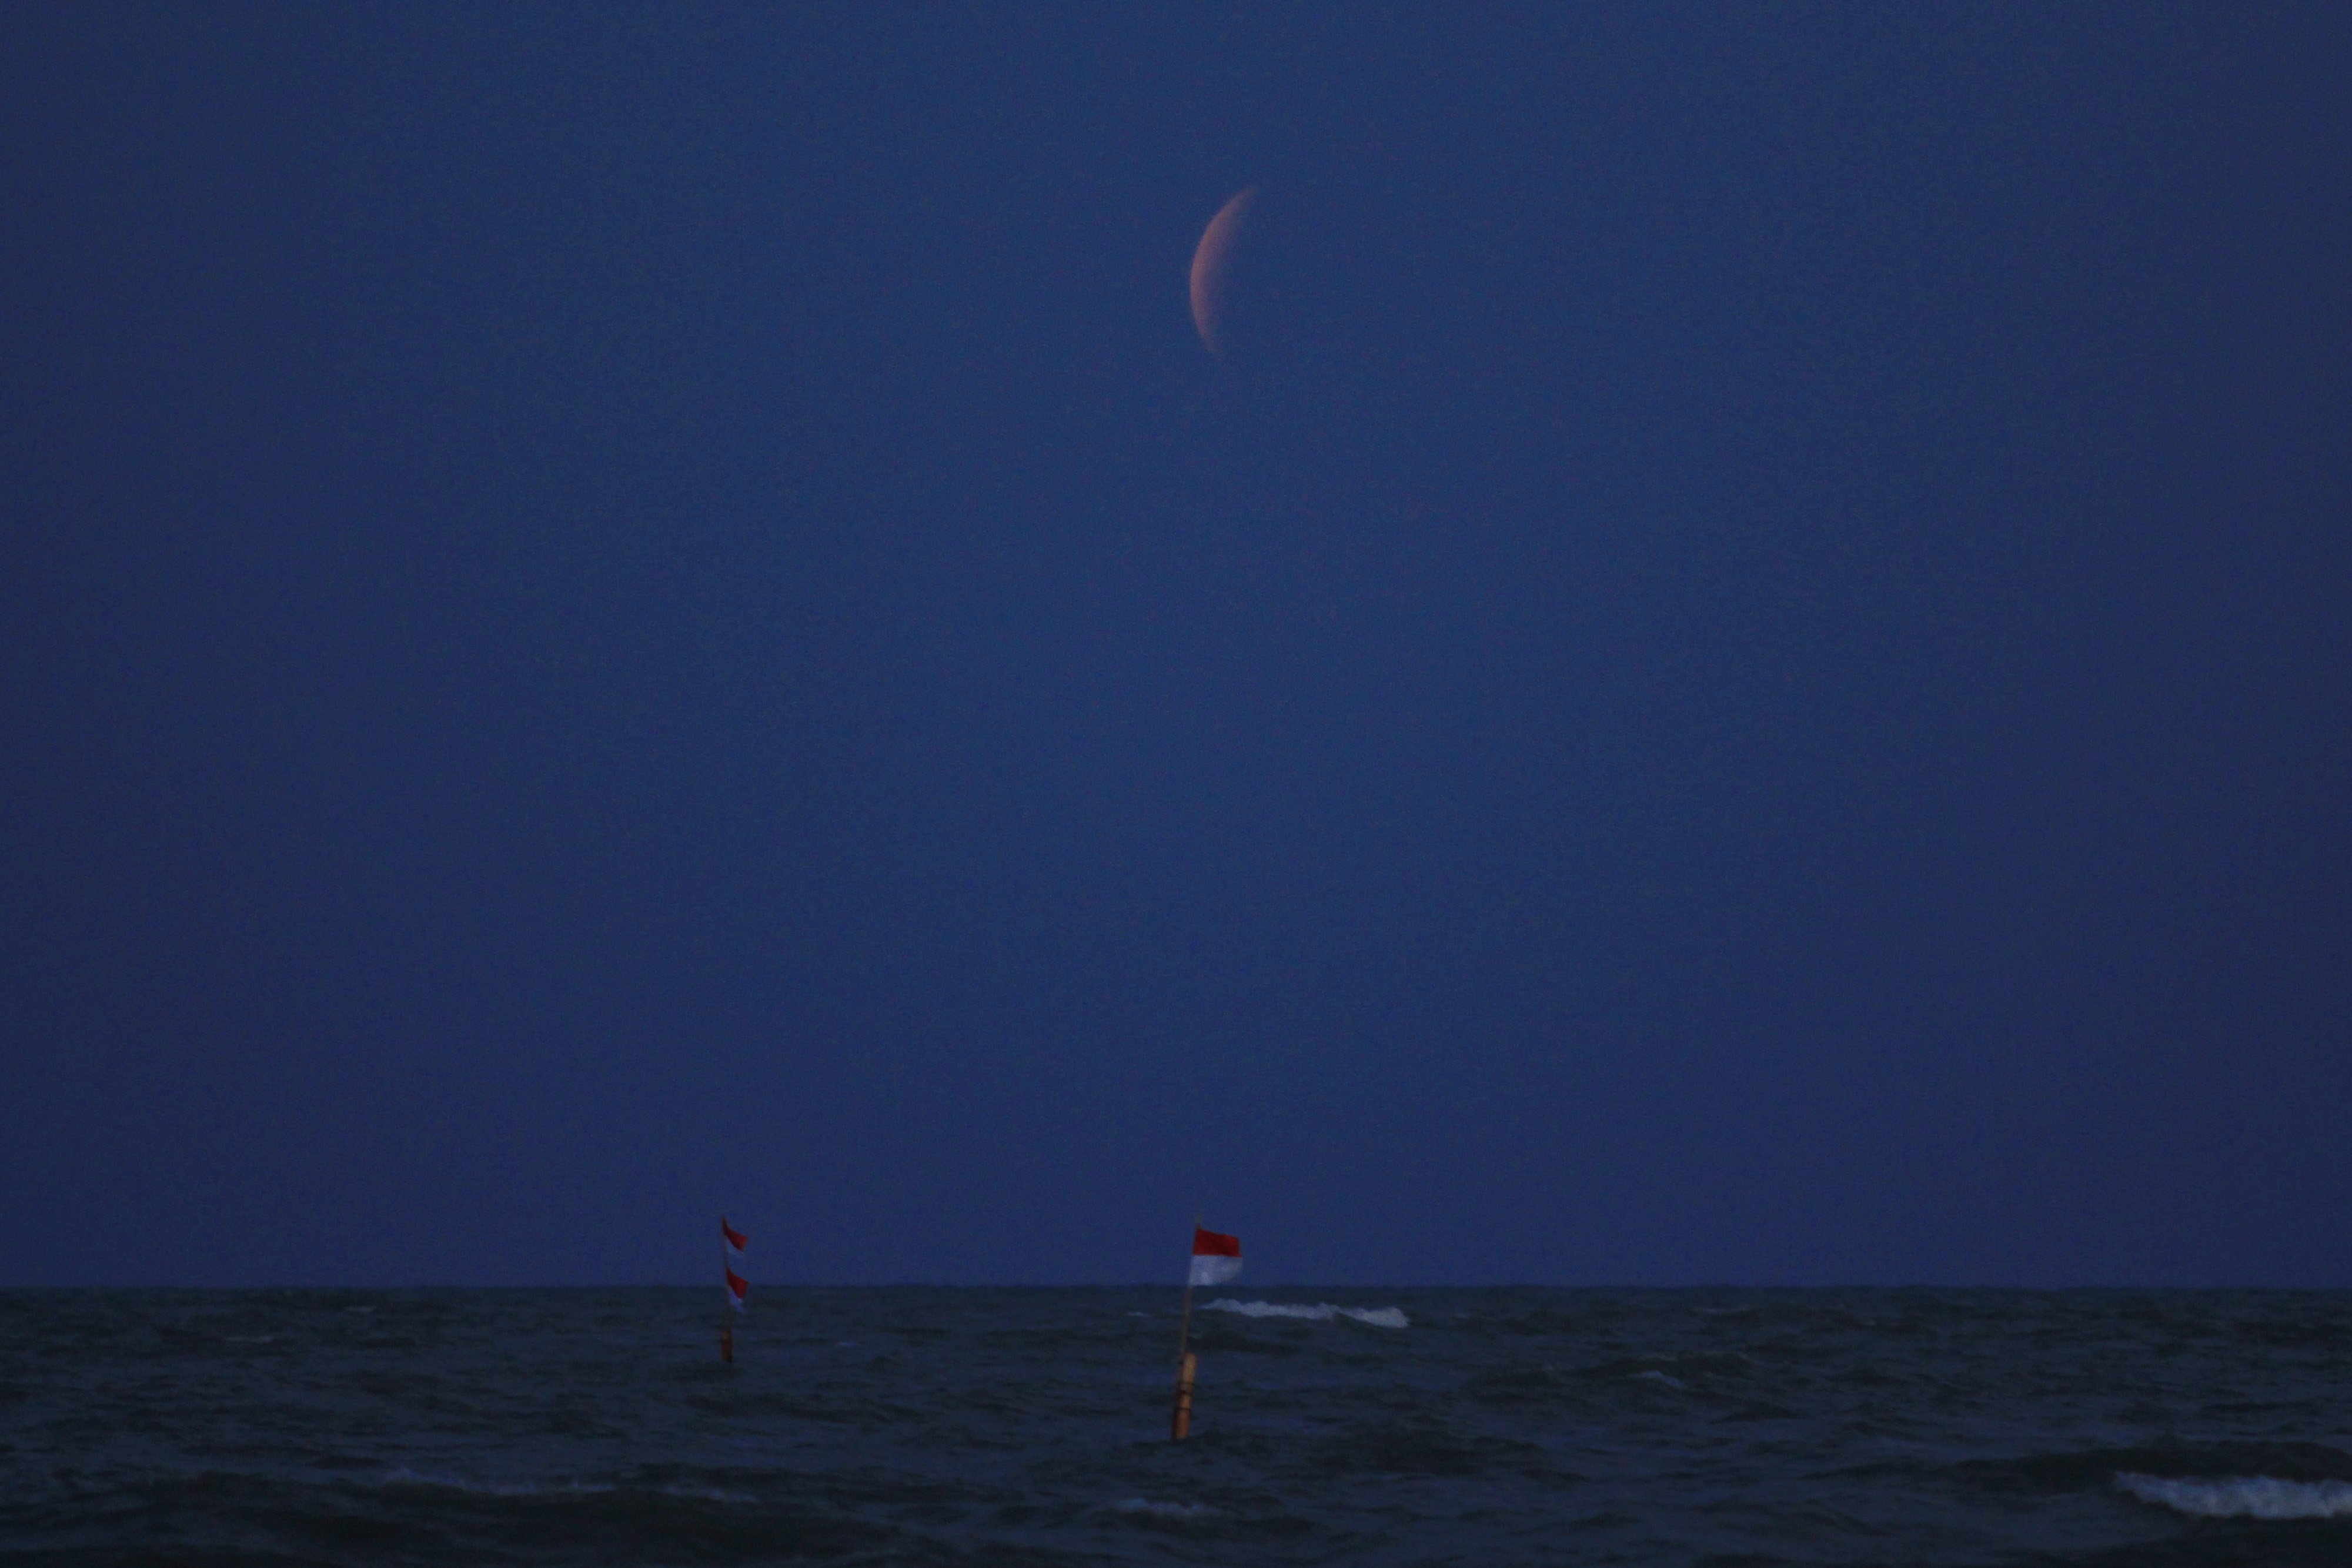 Fase gerhana bulan total terlihat di kawasan pesisir pantai utara Indramayu, Jawa Barat, Rabu 26 Mei/ANTARA FOTO/Dedhez Anggara/